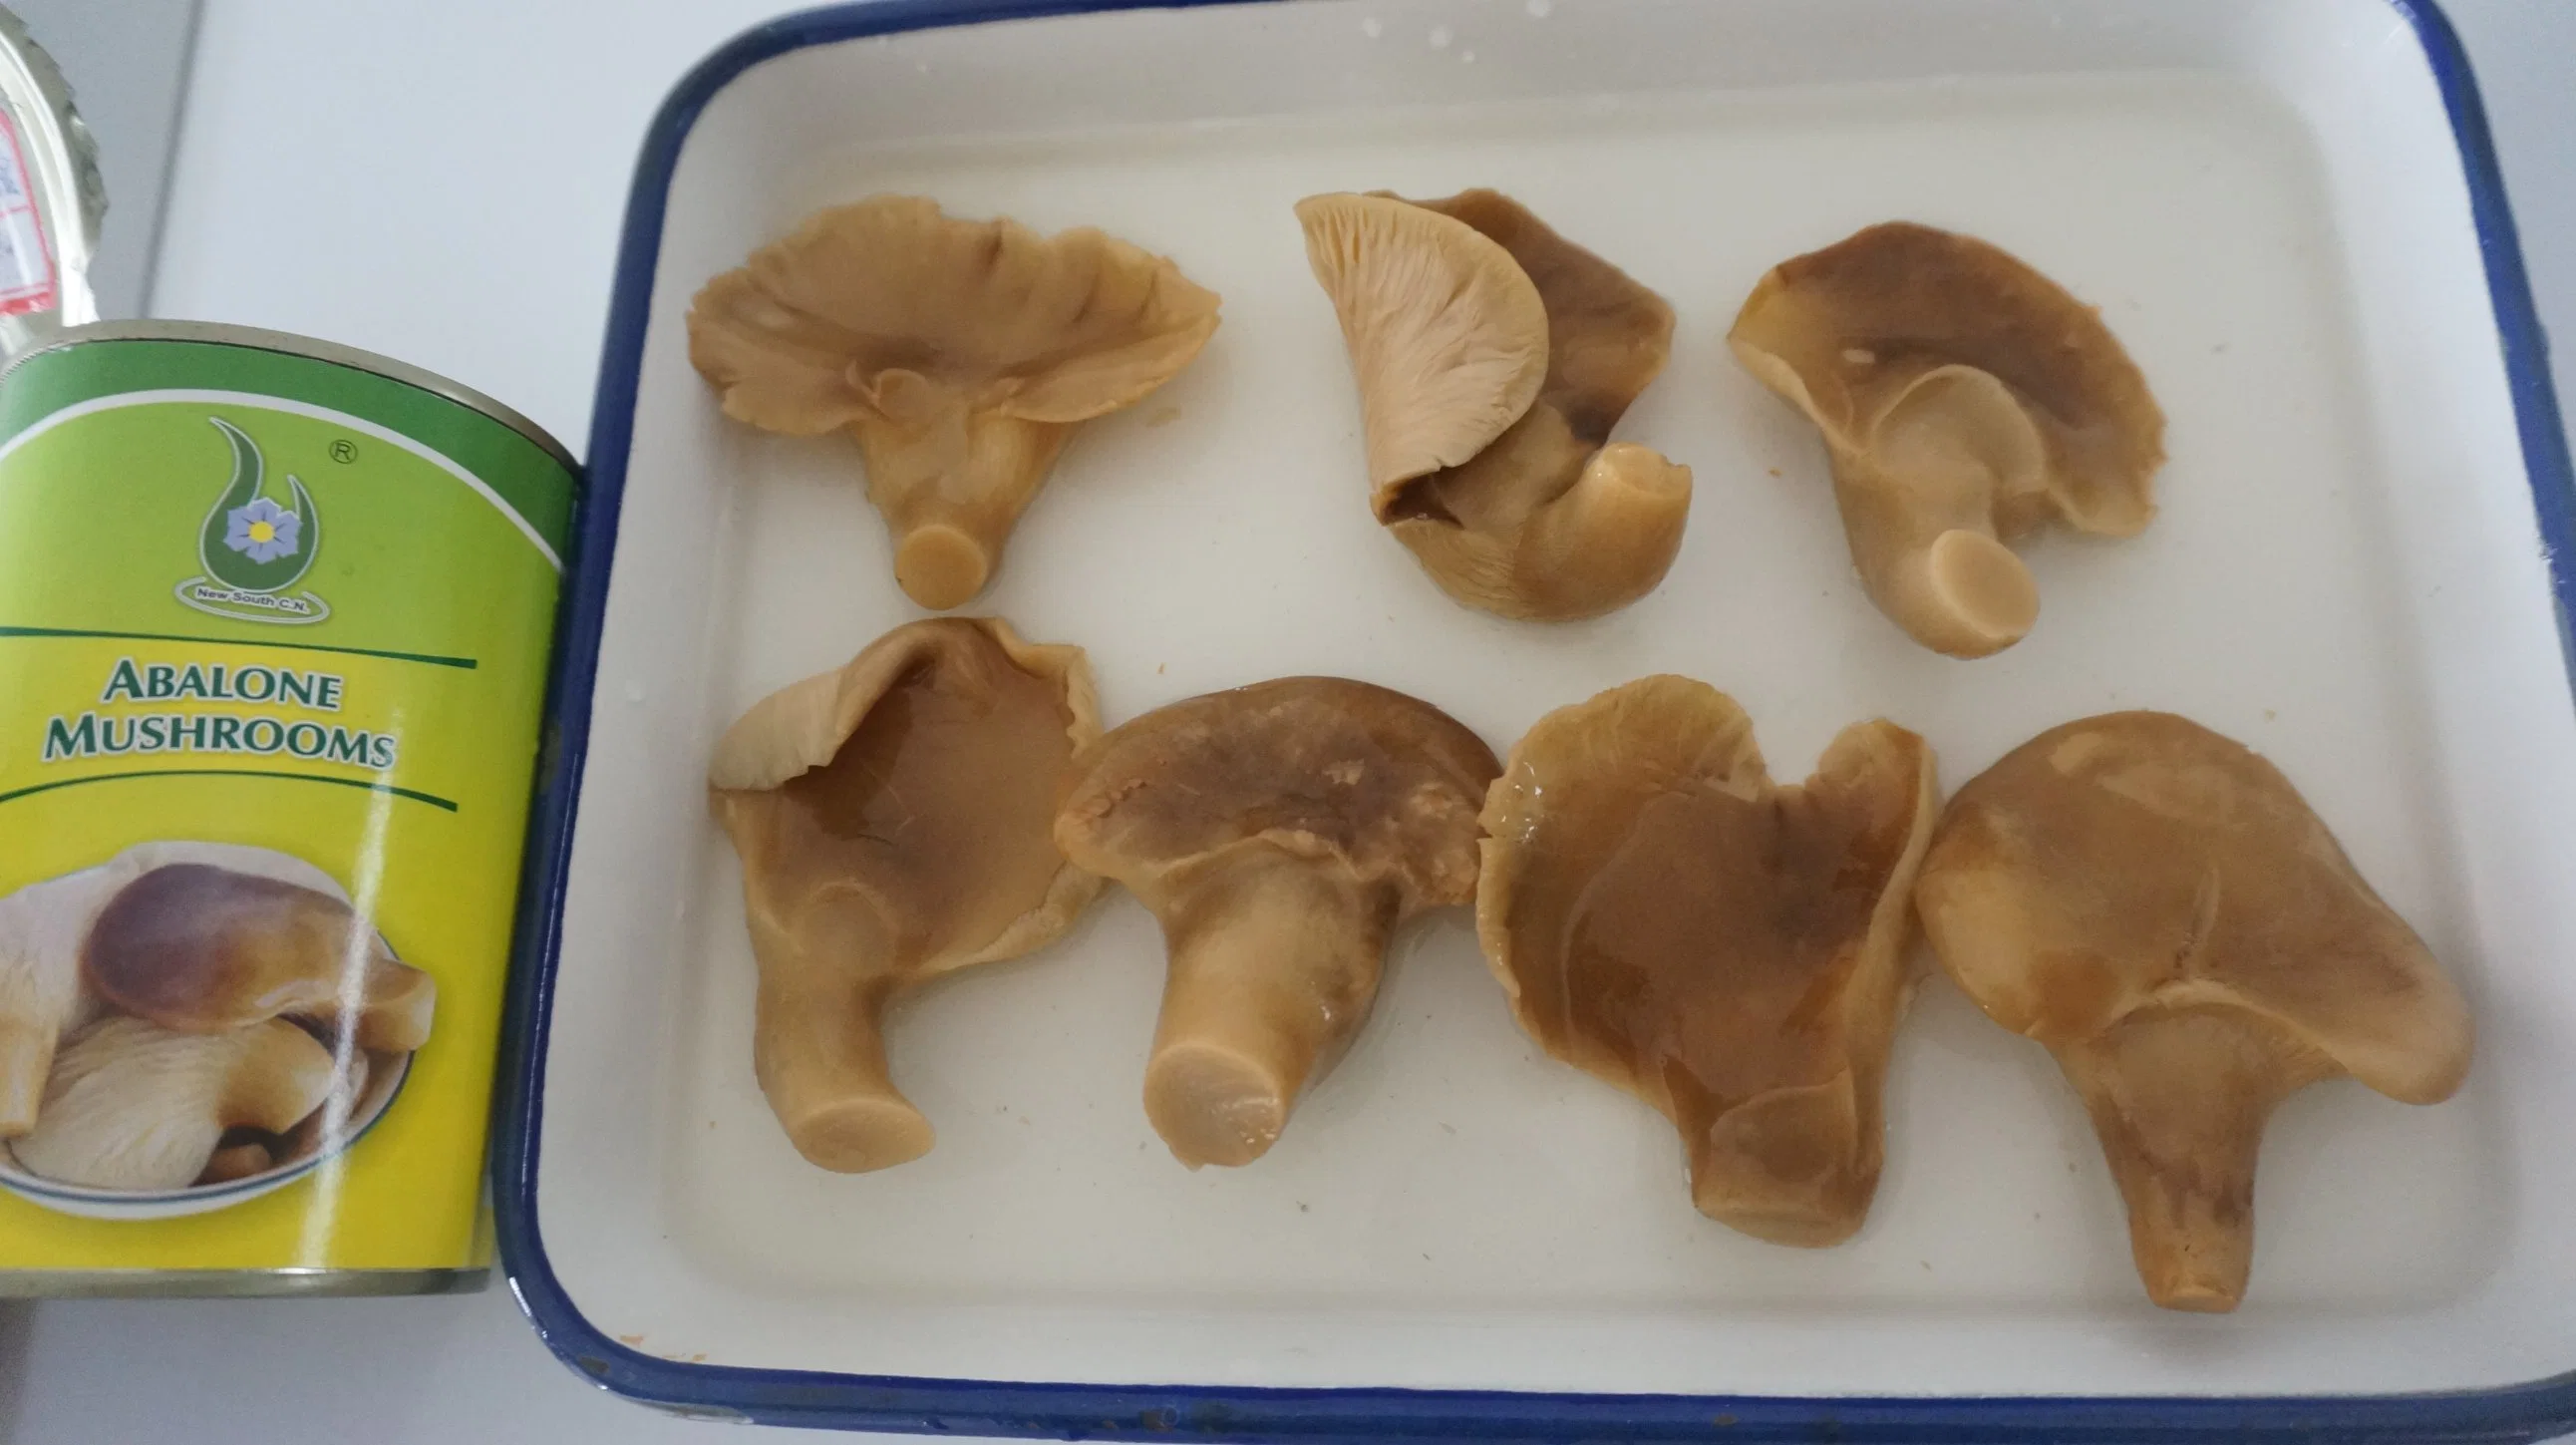 Oyster-/Abalone-Pilzkonserven (pleurotus ostreatus) Produktexport nach Vietnam